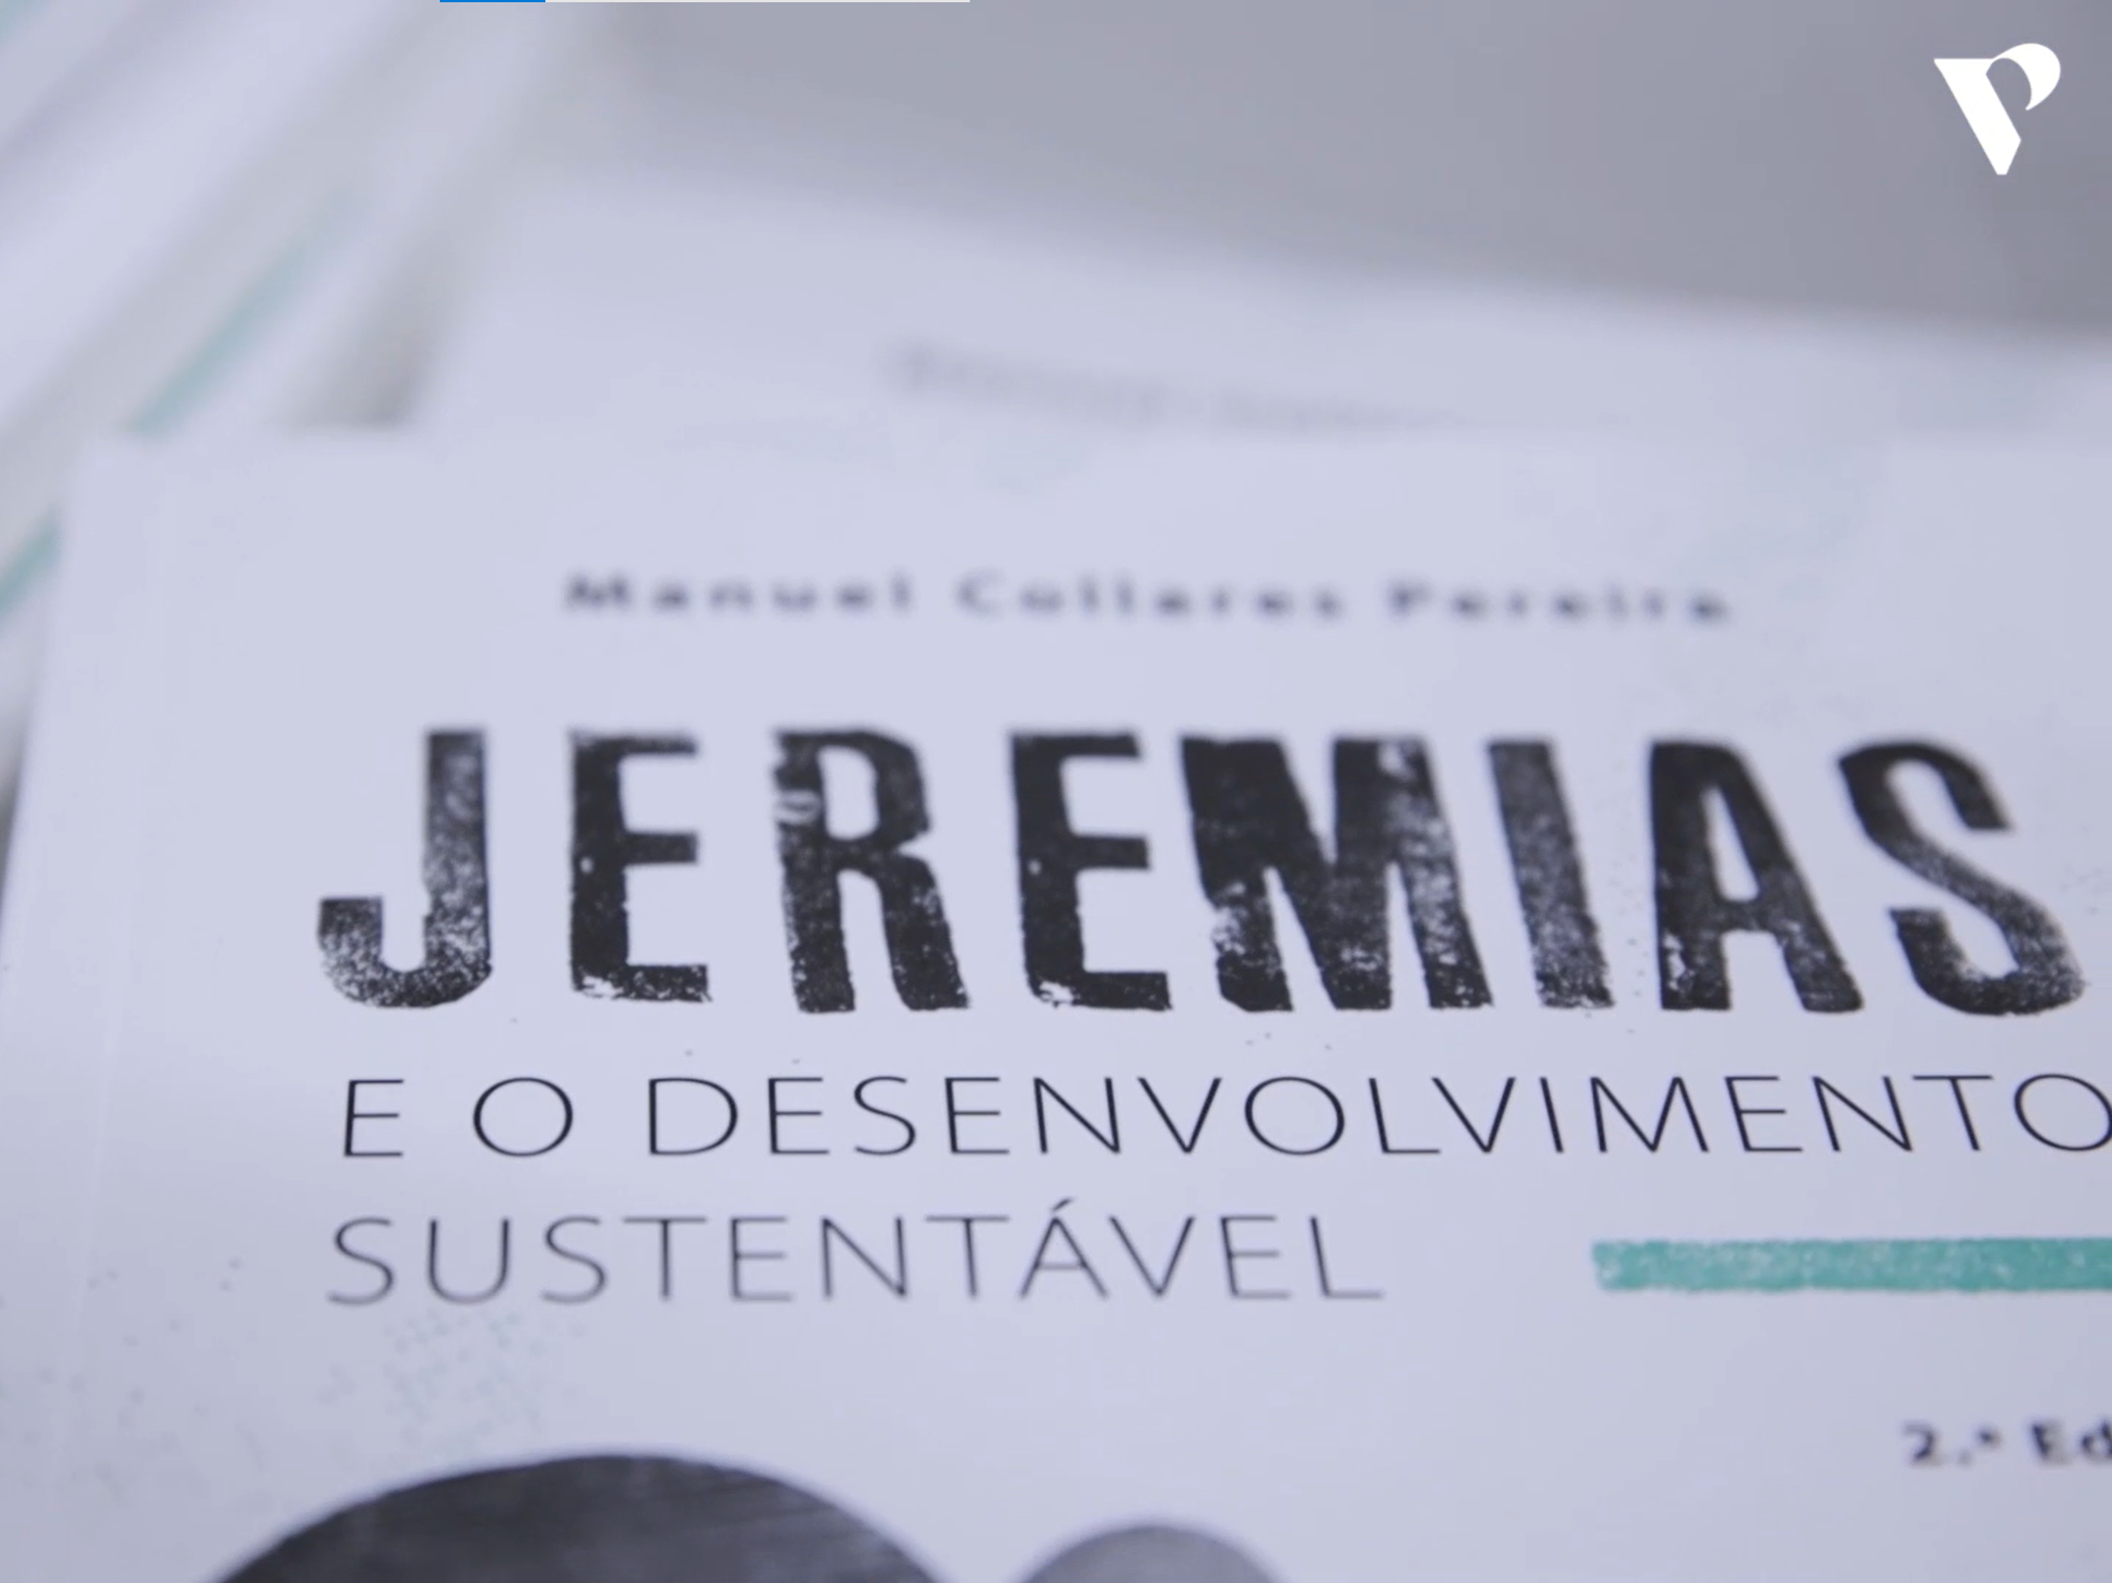 Jeremias (Video)